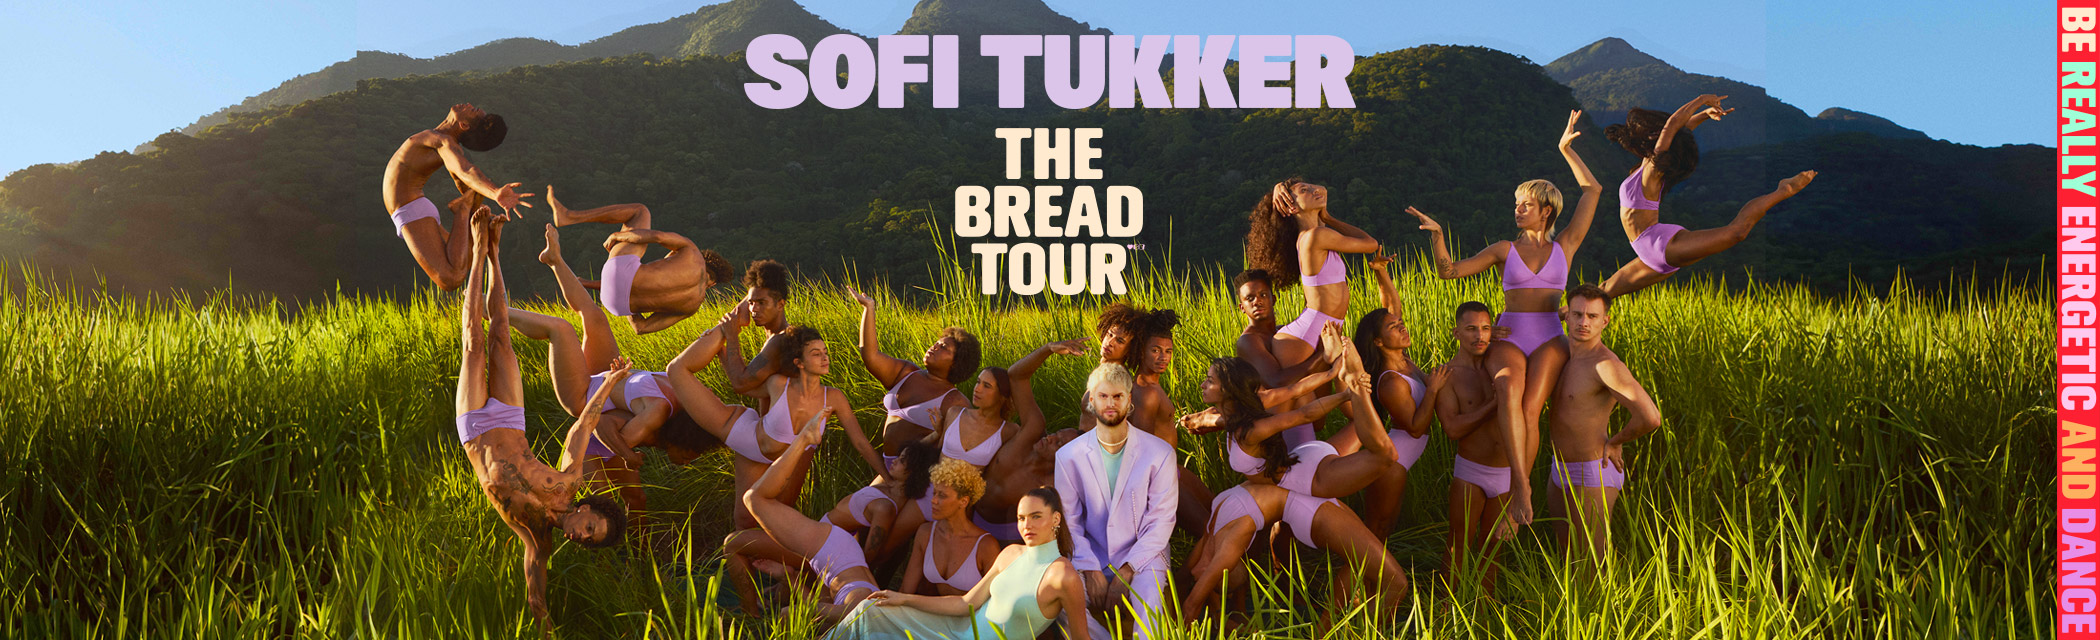 The Bread Tour